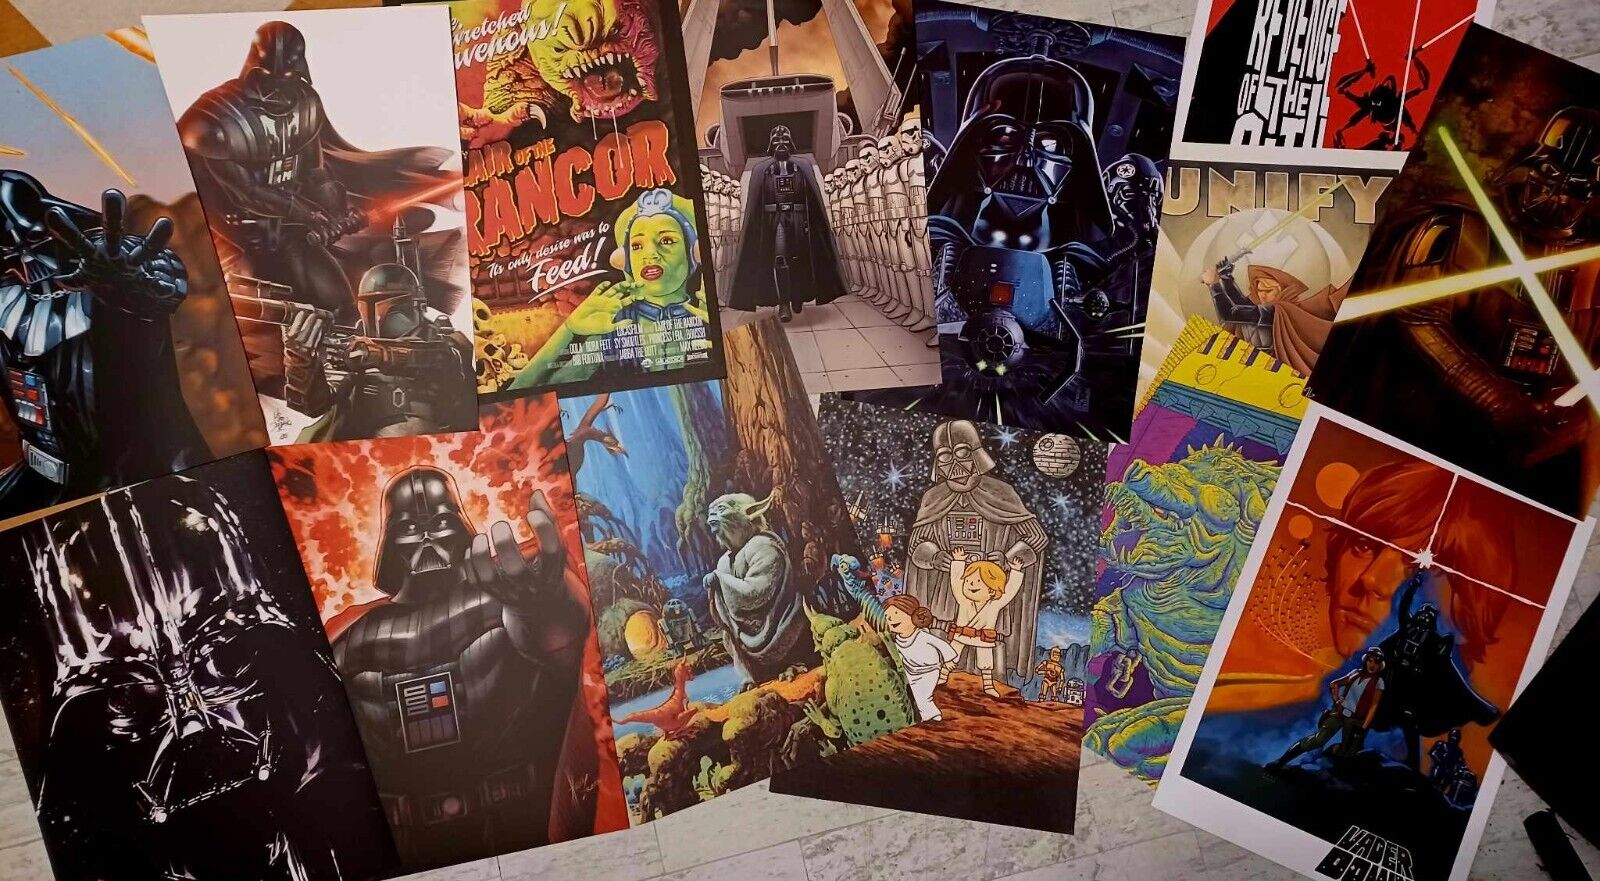 Lot of 14 Star Wars Poster Art Prints Collection - Darth Vade, etc Marvel Comics